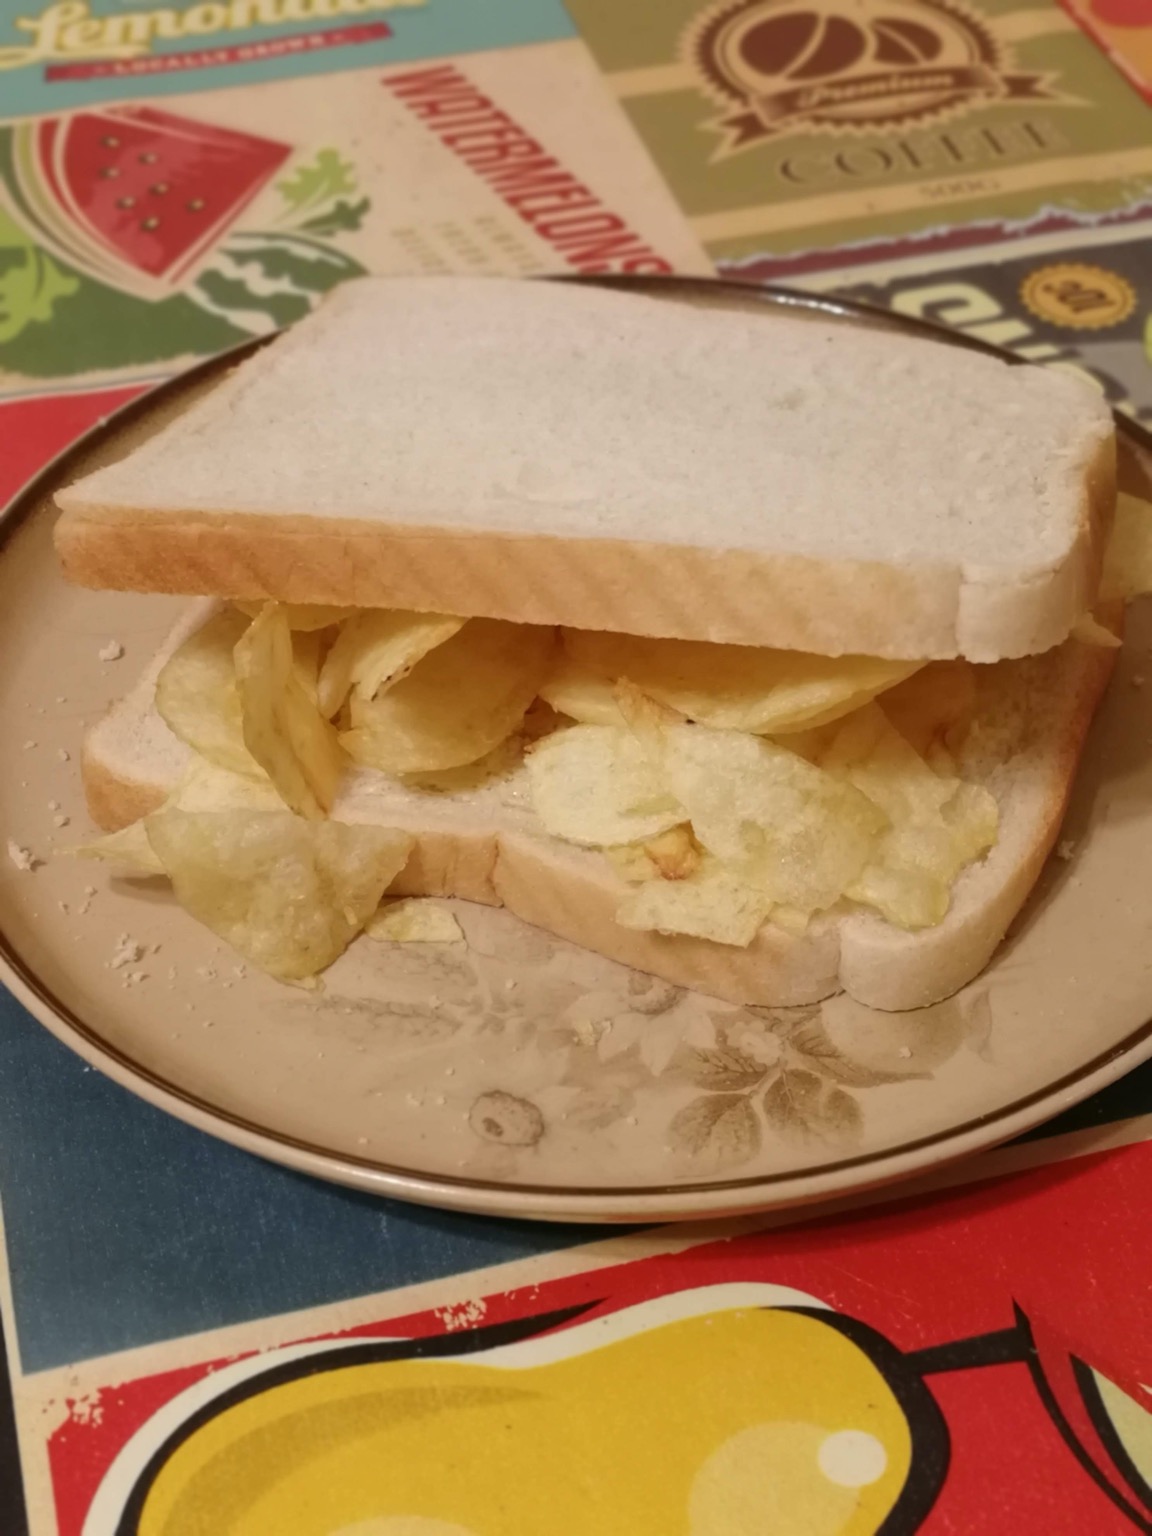 White crisp sandwich on a plate on a decorative tablecloth